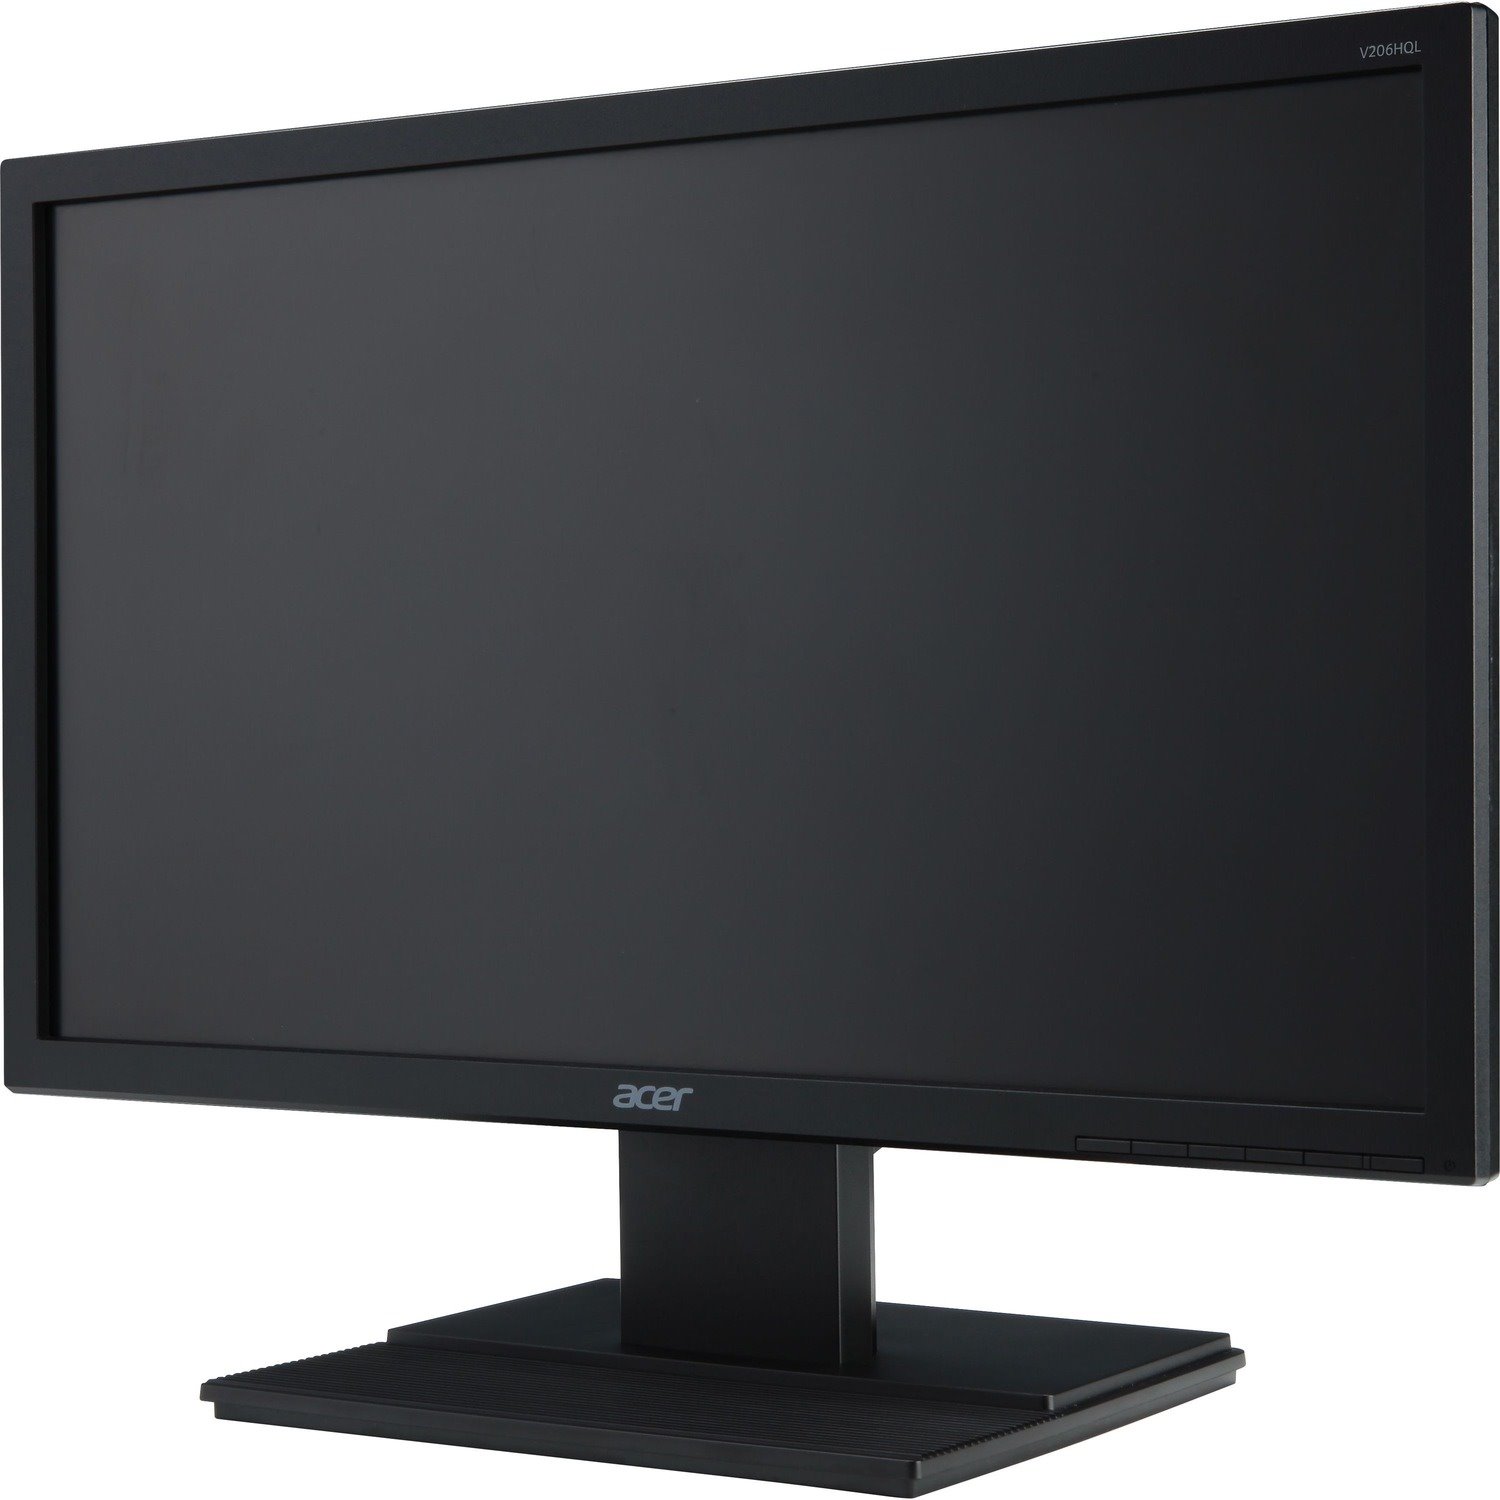 Acer V206HQL 19.5" LED LCD Monitor - 16:9 - 5ms - Free 3 year Warranty